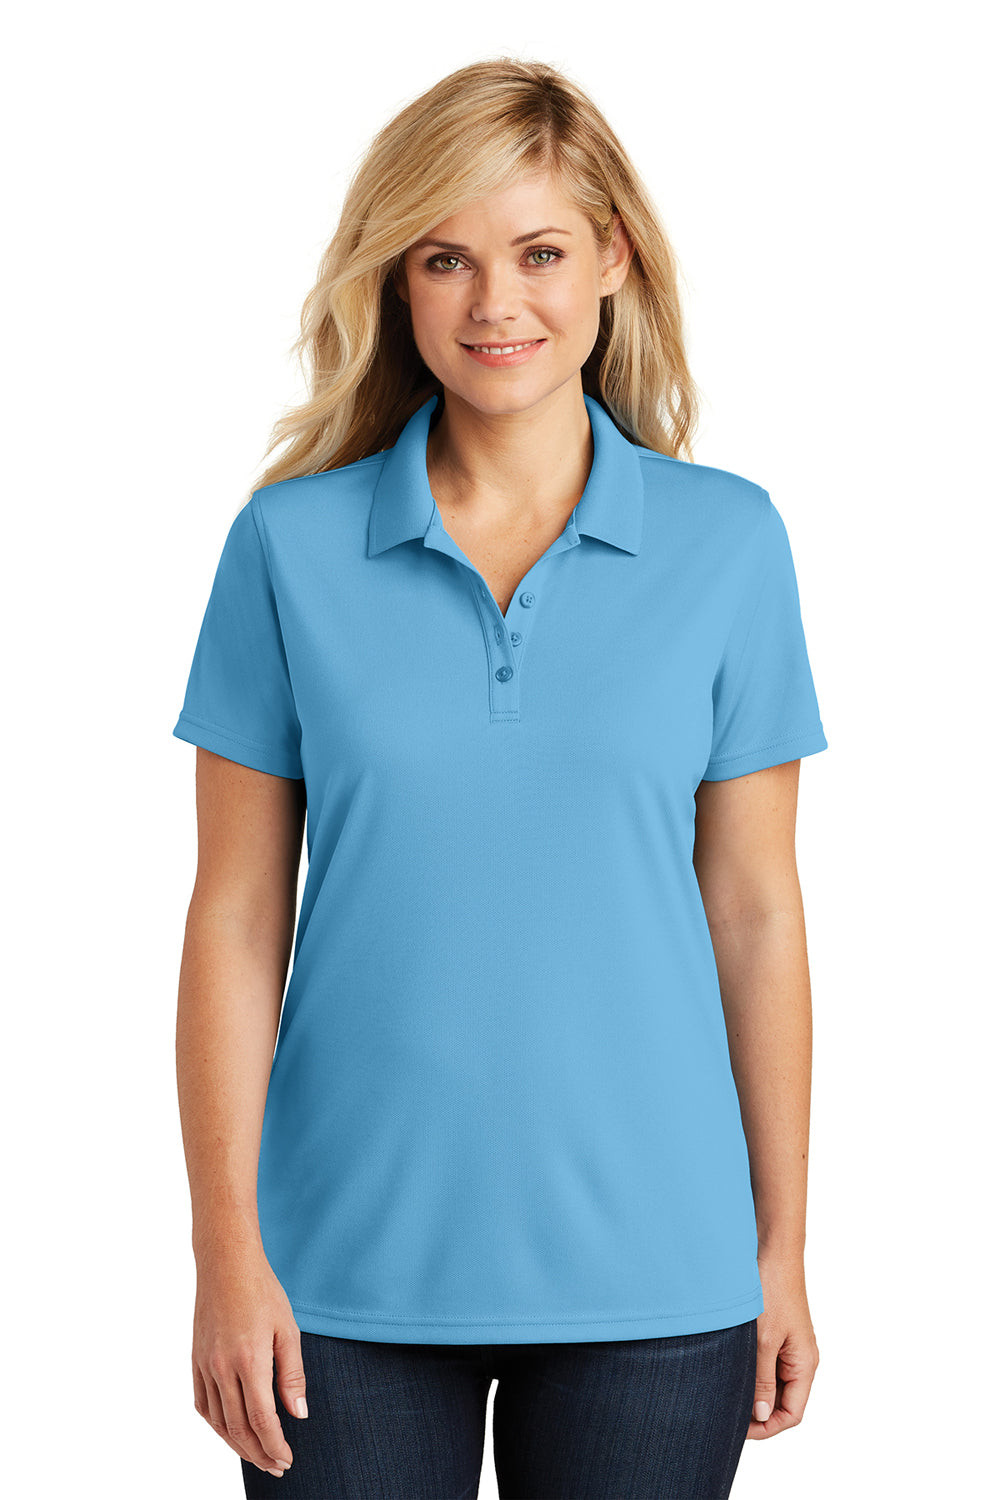 Port Authority LK110 Womens Dry Zone Moisture Wicking Short Sleeve Polo Shirt Carolina Blue Front